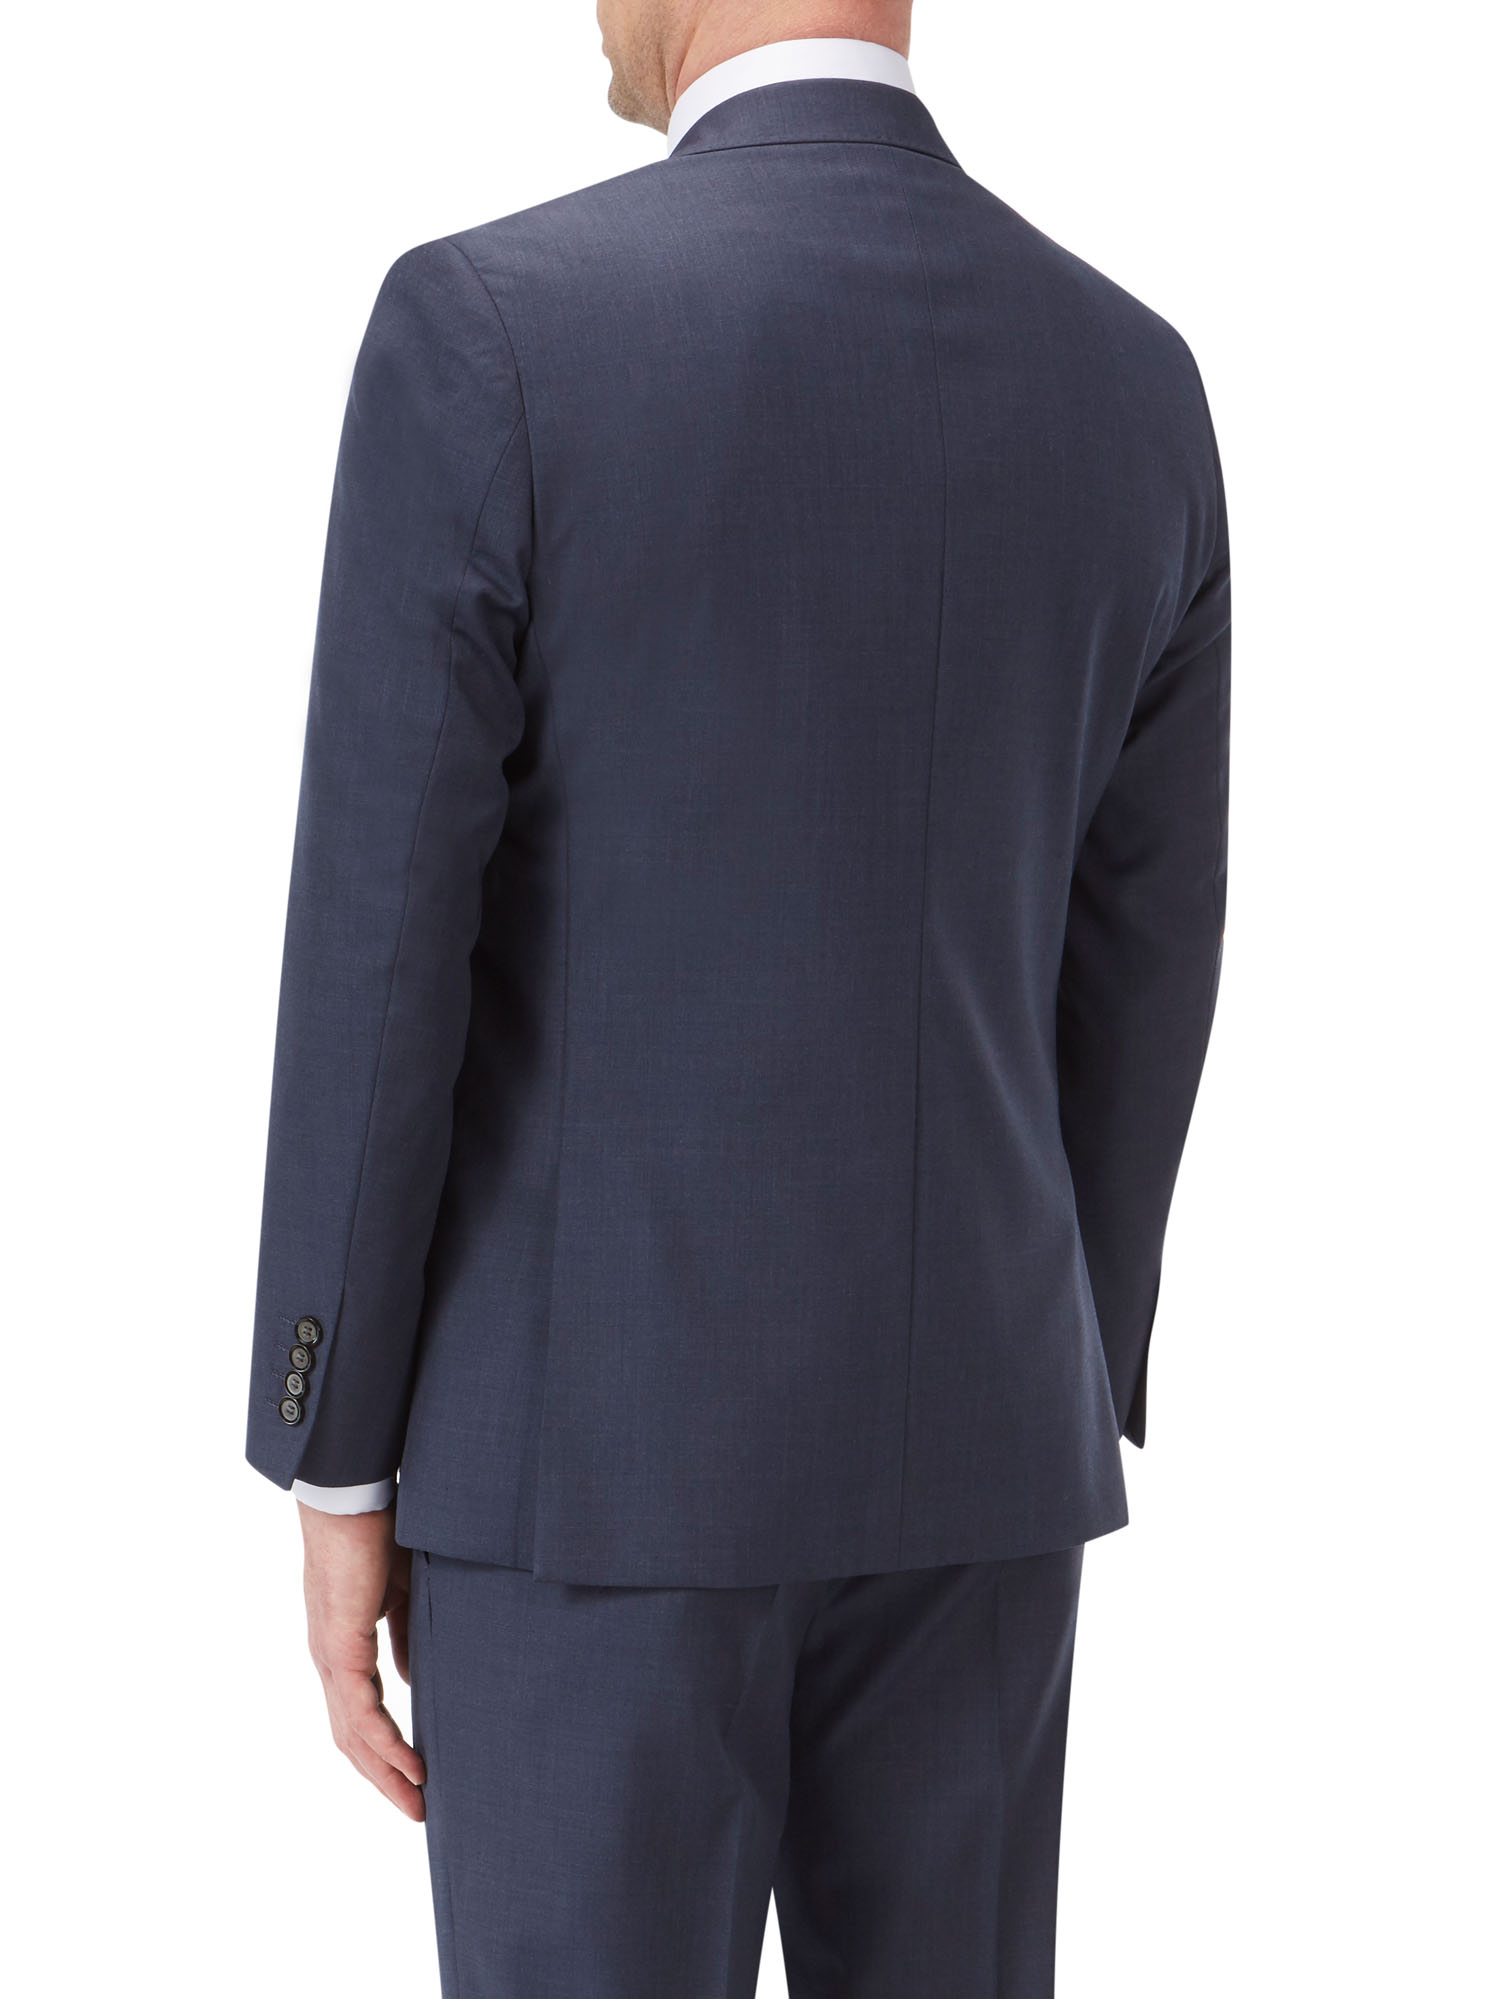 Joss Indigo 3 Piece Suit - Tom Murphy's Formal and Menswear